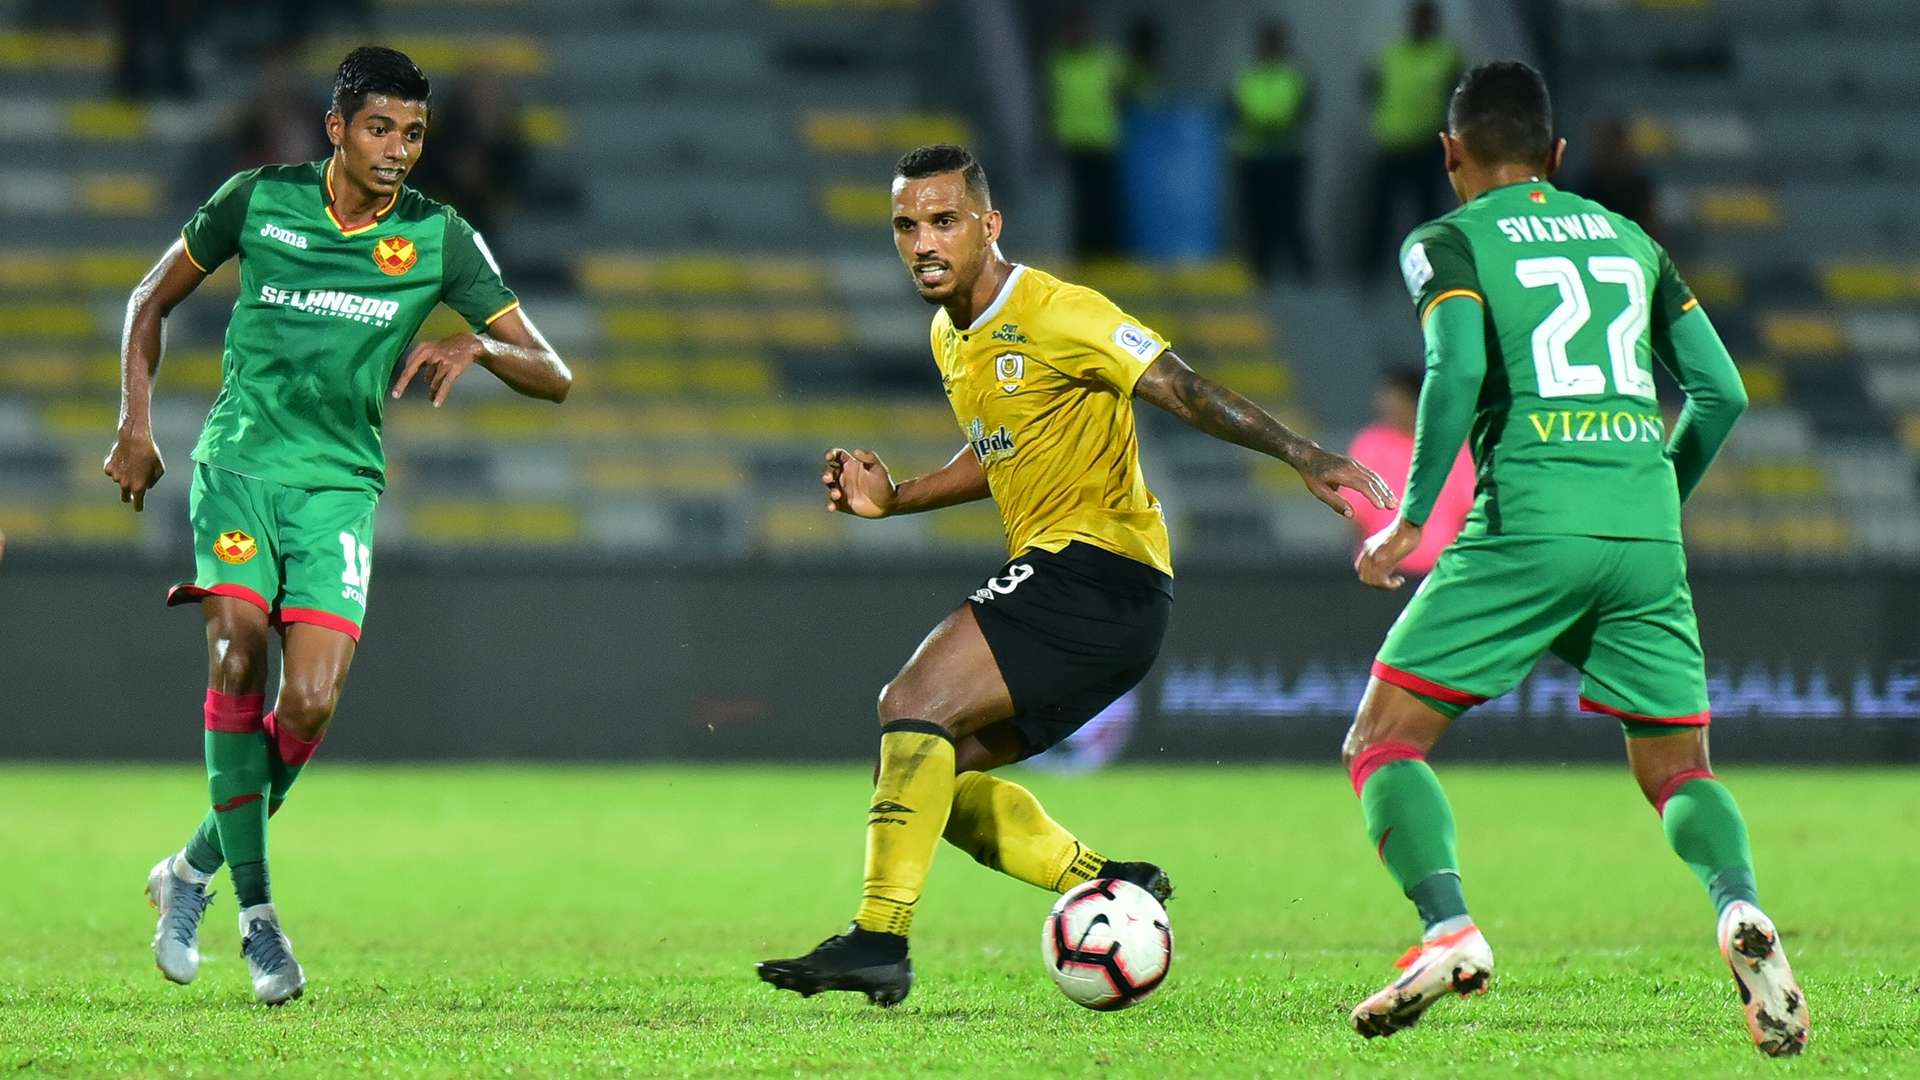 Leandro dos Santos, Perak v Selangor, Malaysia Super League, 10 Jul 2019